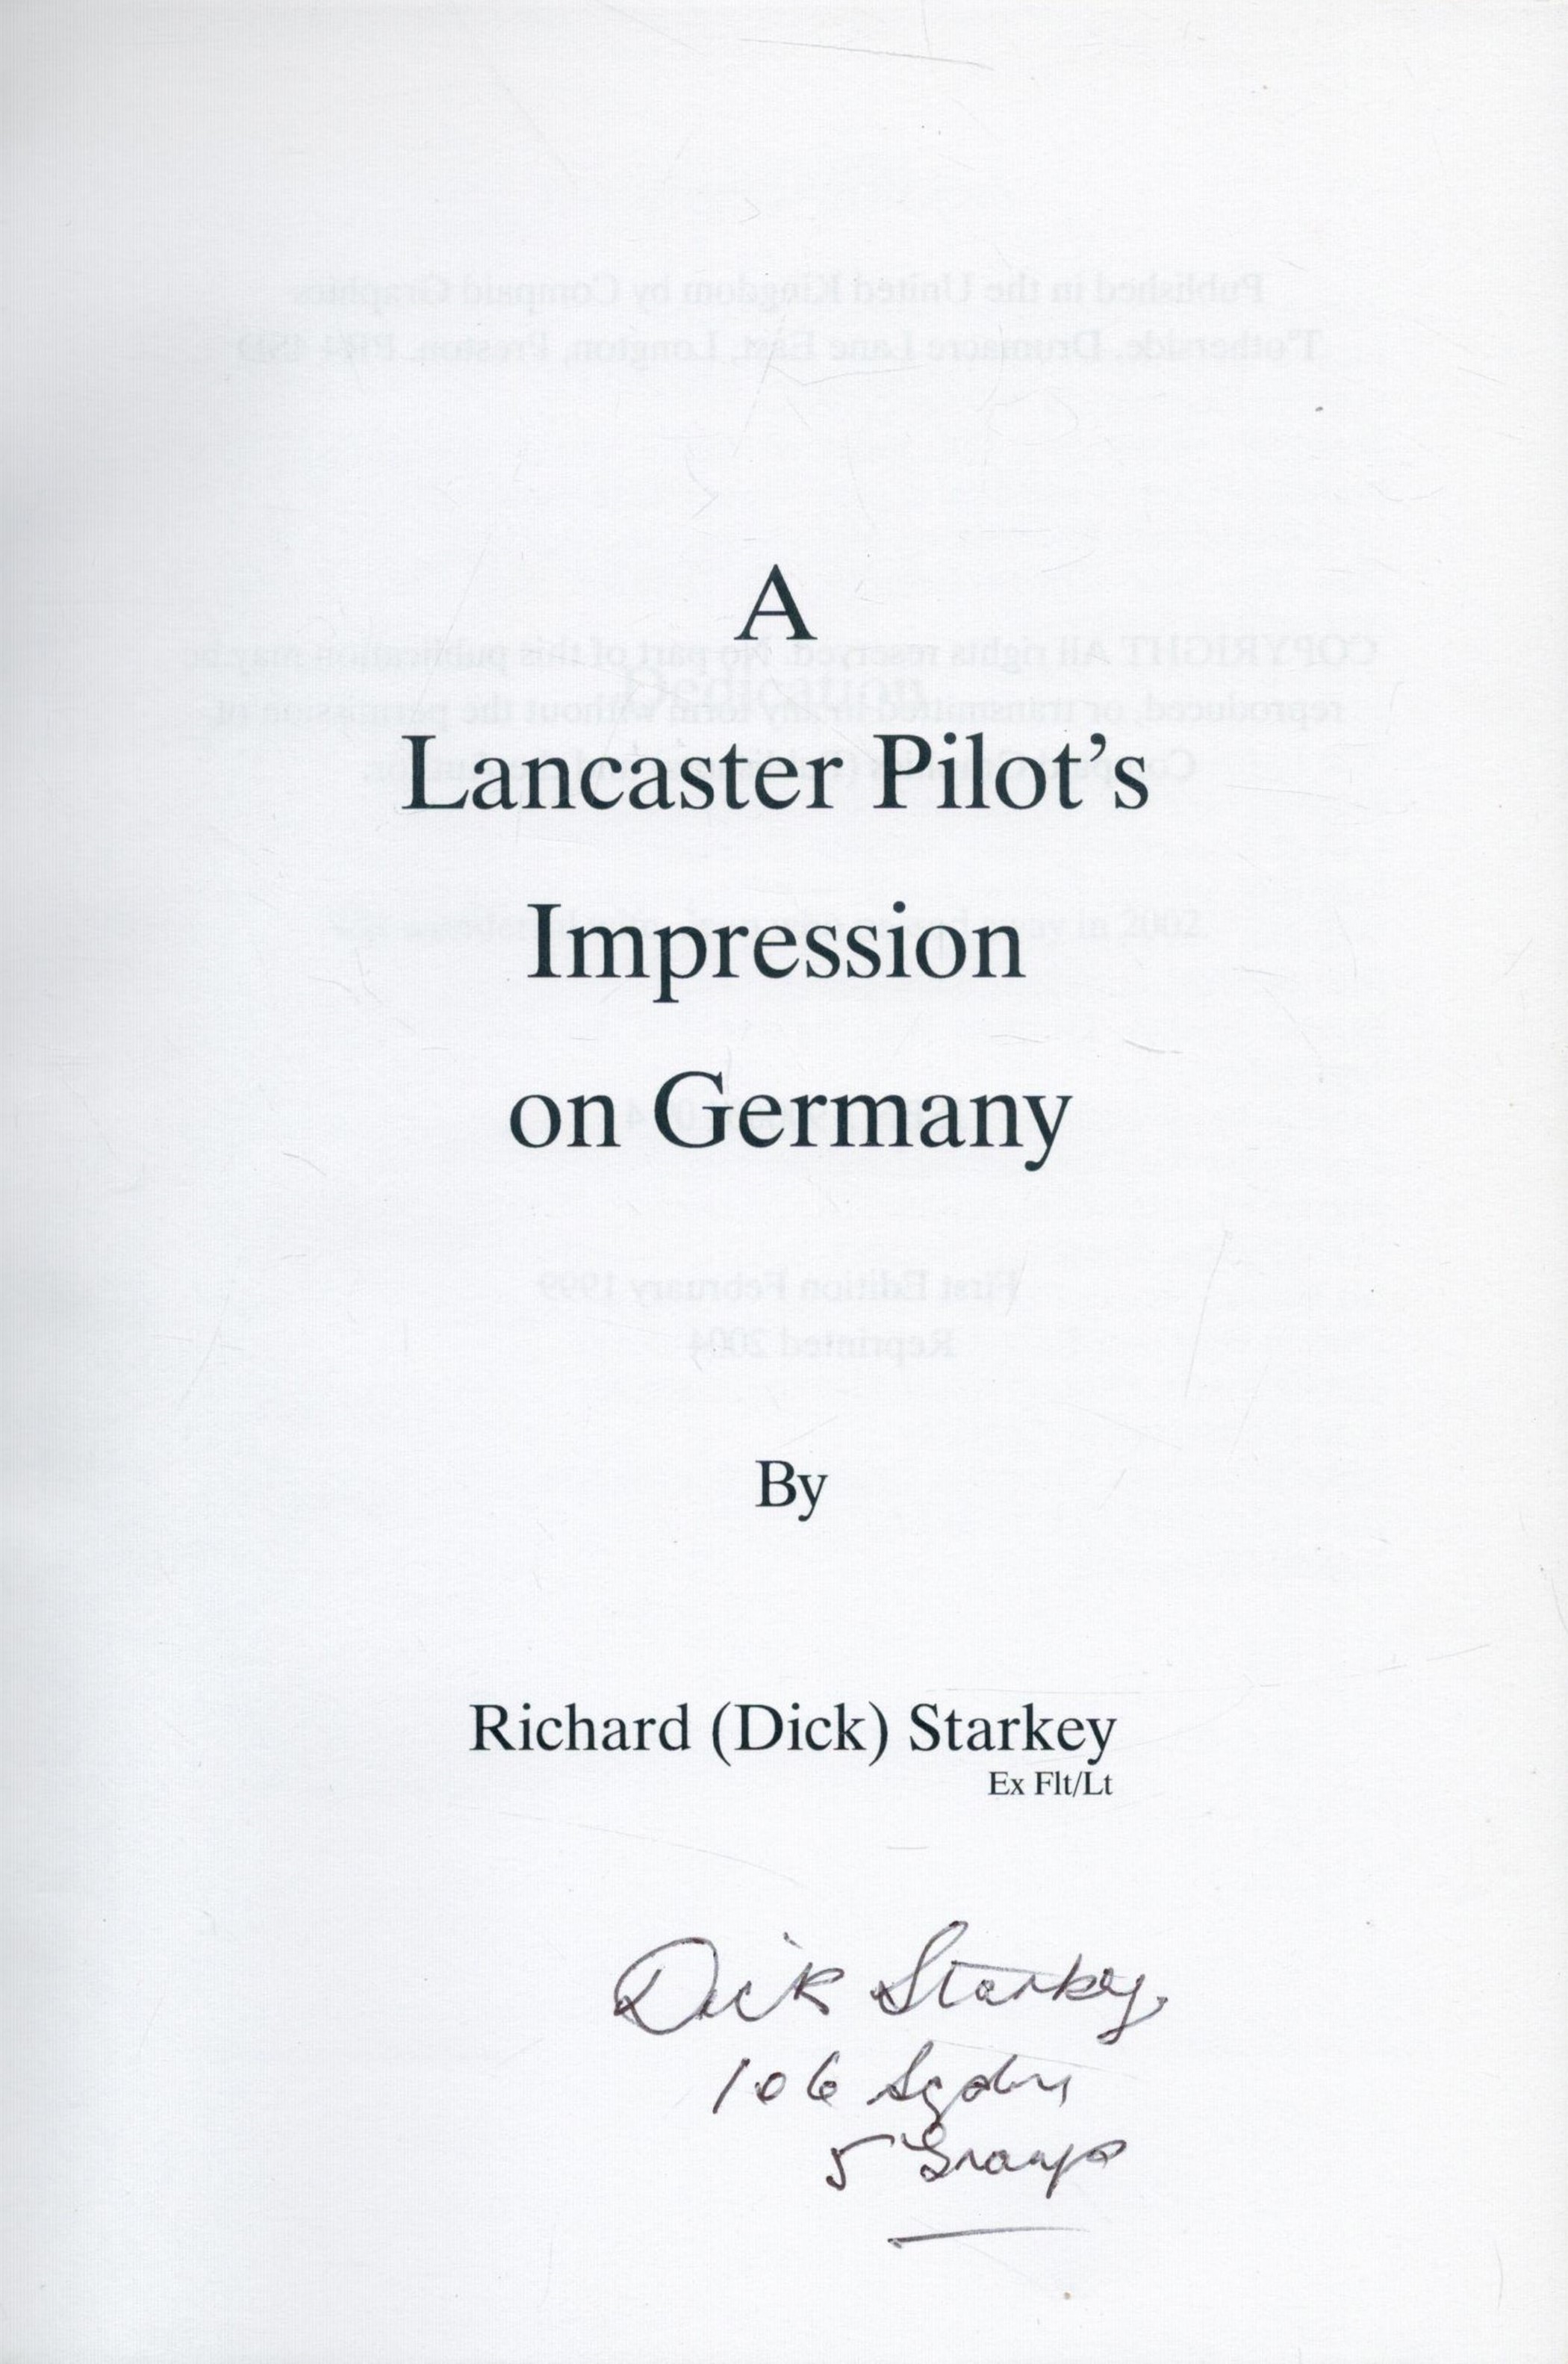 WW2 Flt Lt and POW Dick Starkey Signed A Lancaster Pilot's impression on Germany Paperback Book. - Bild 6 aus 9